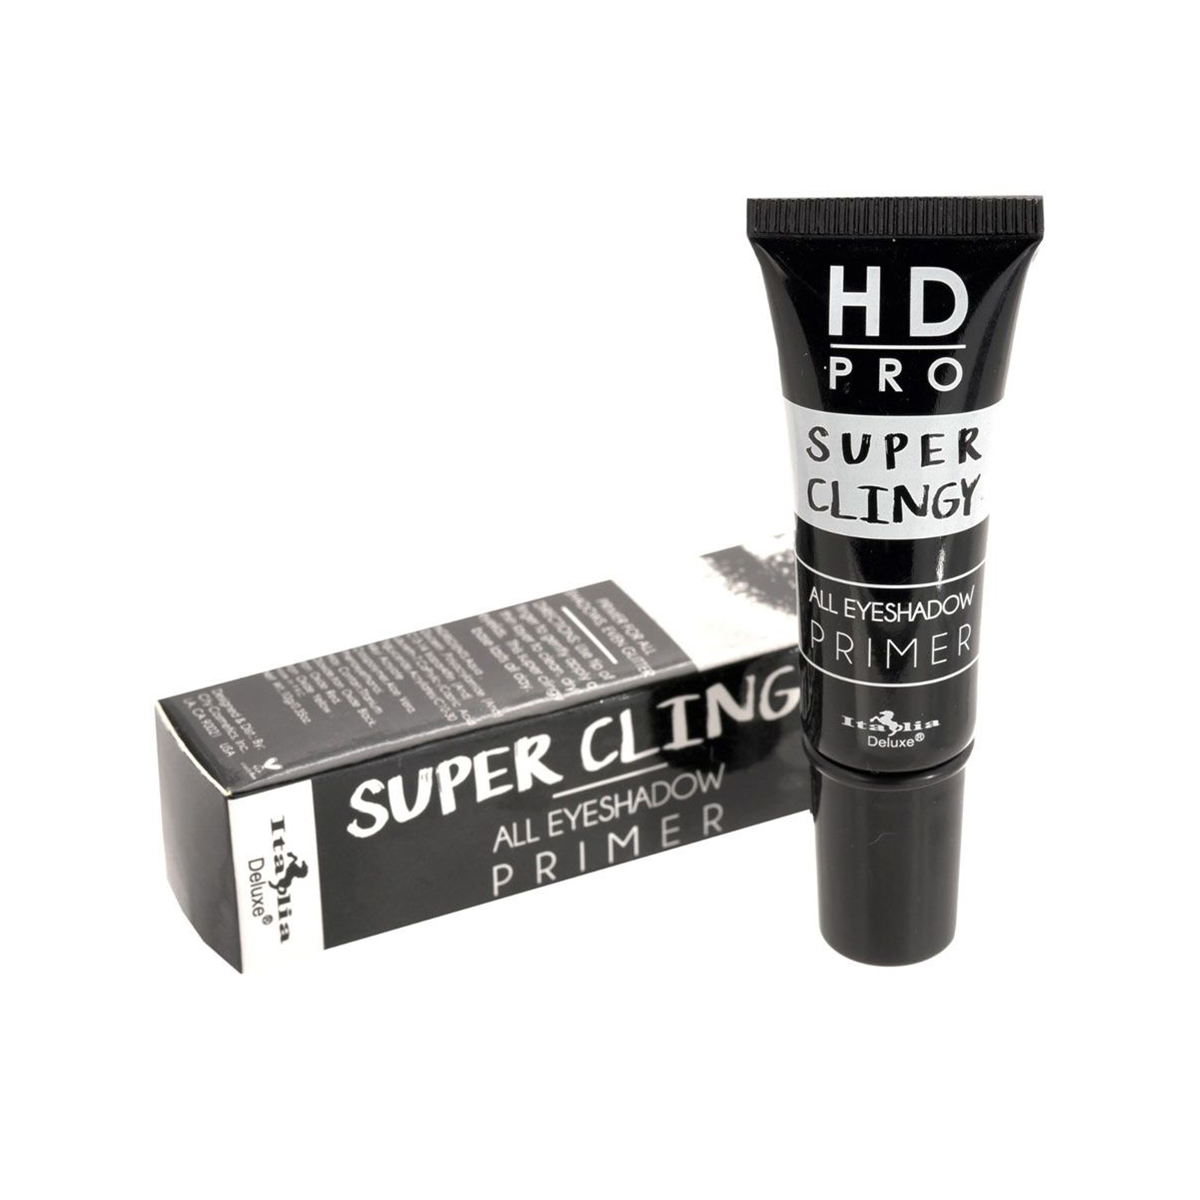 HD Pro Super Clingy Eyeshadow Primer